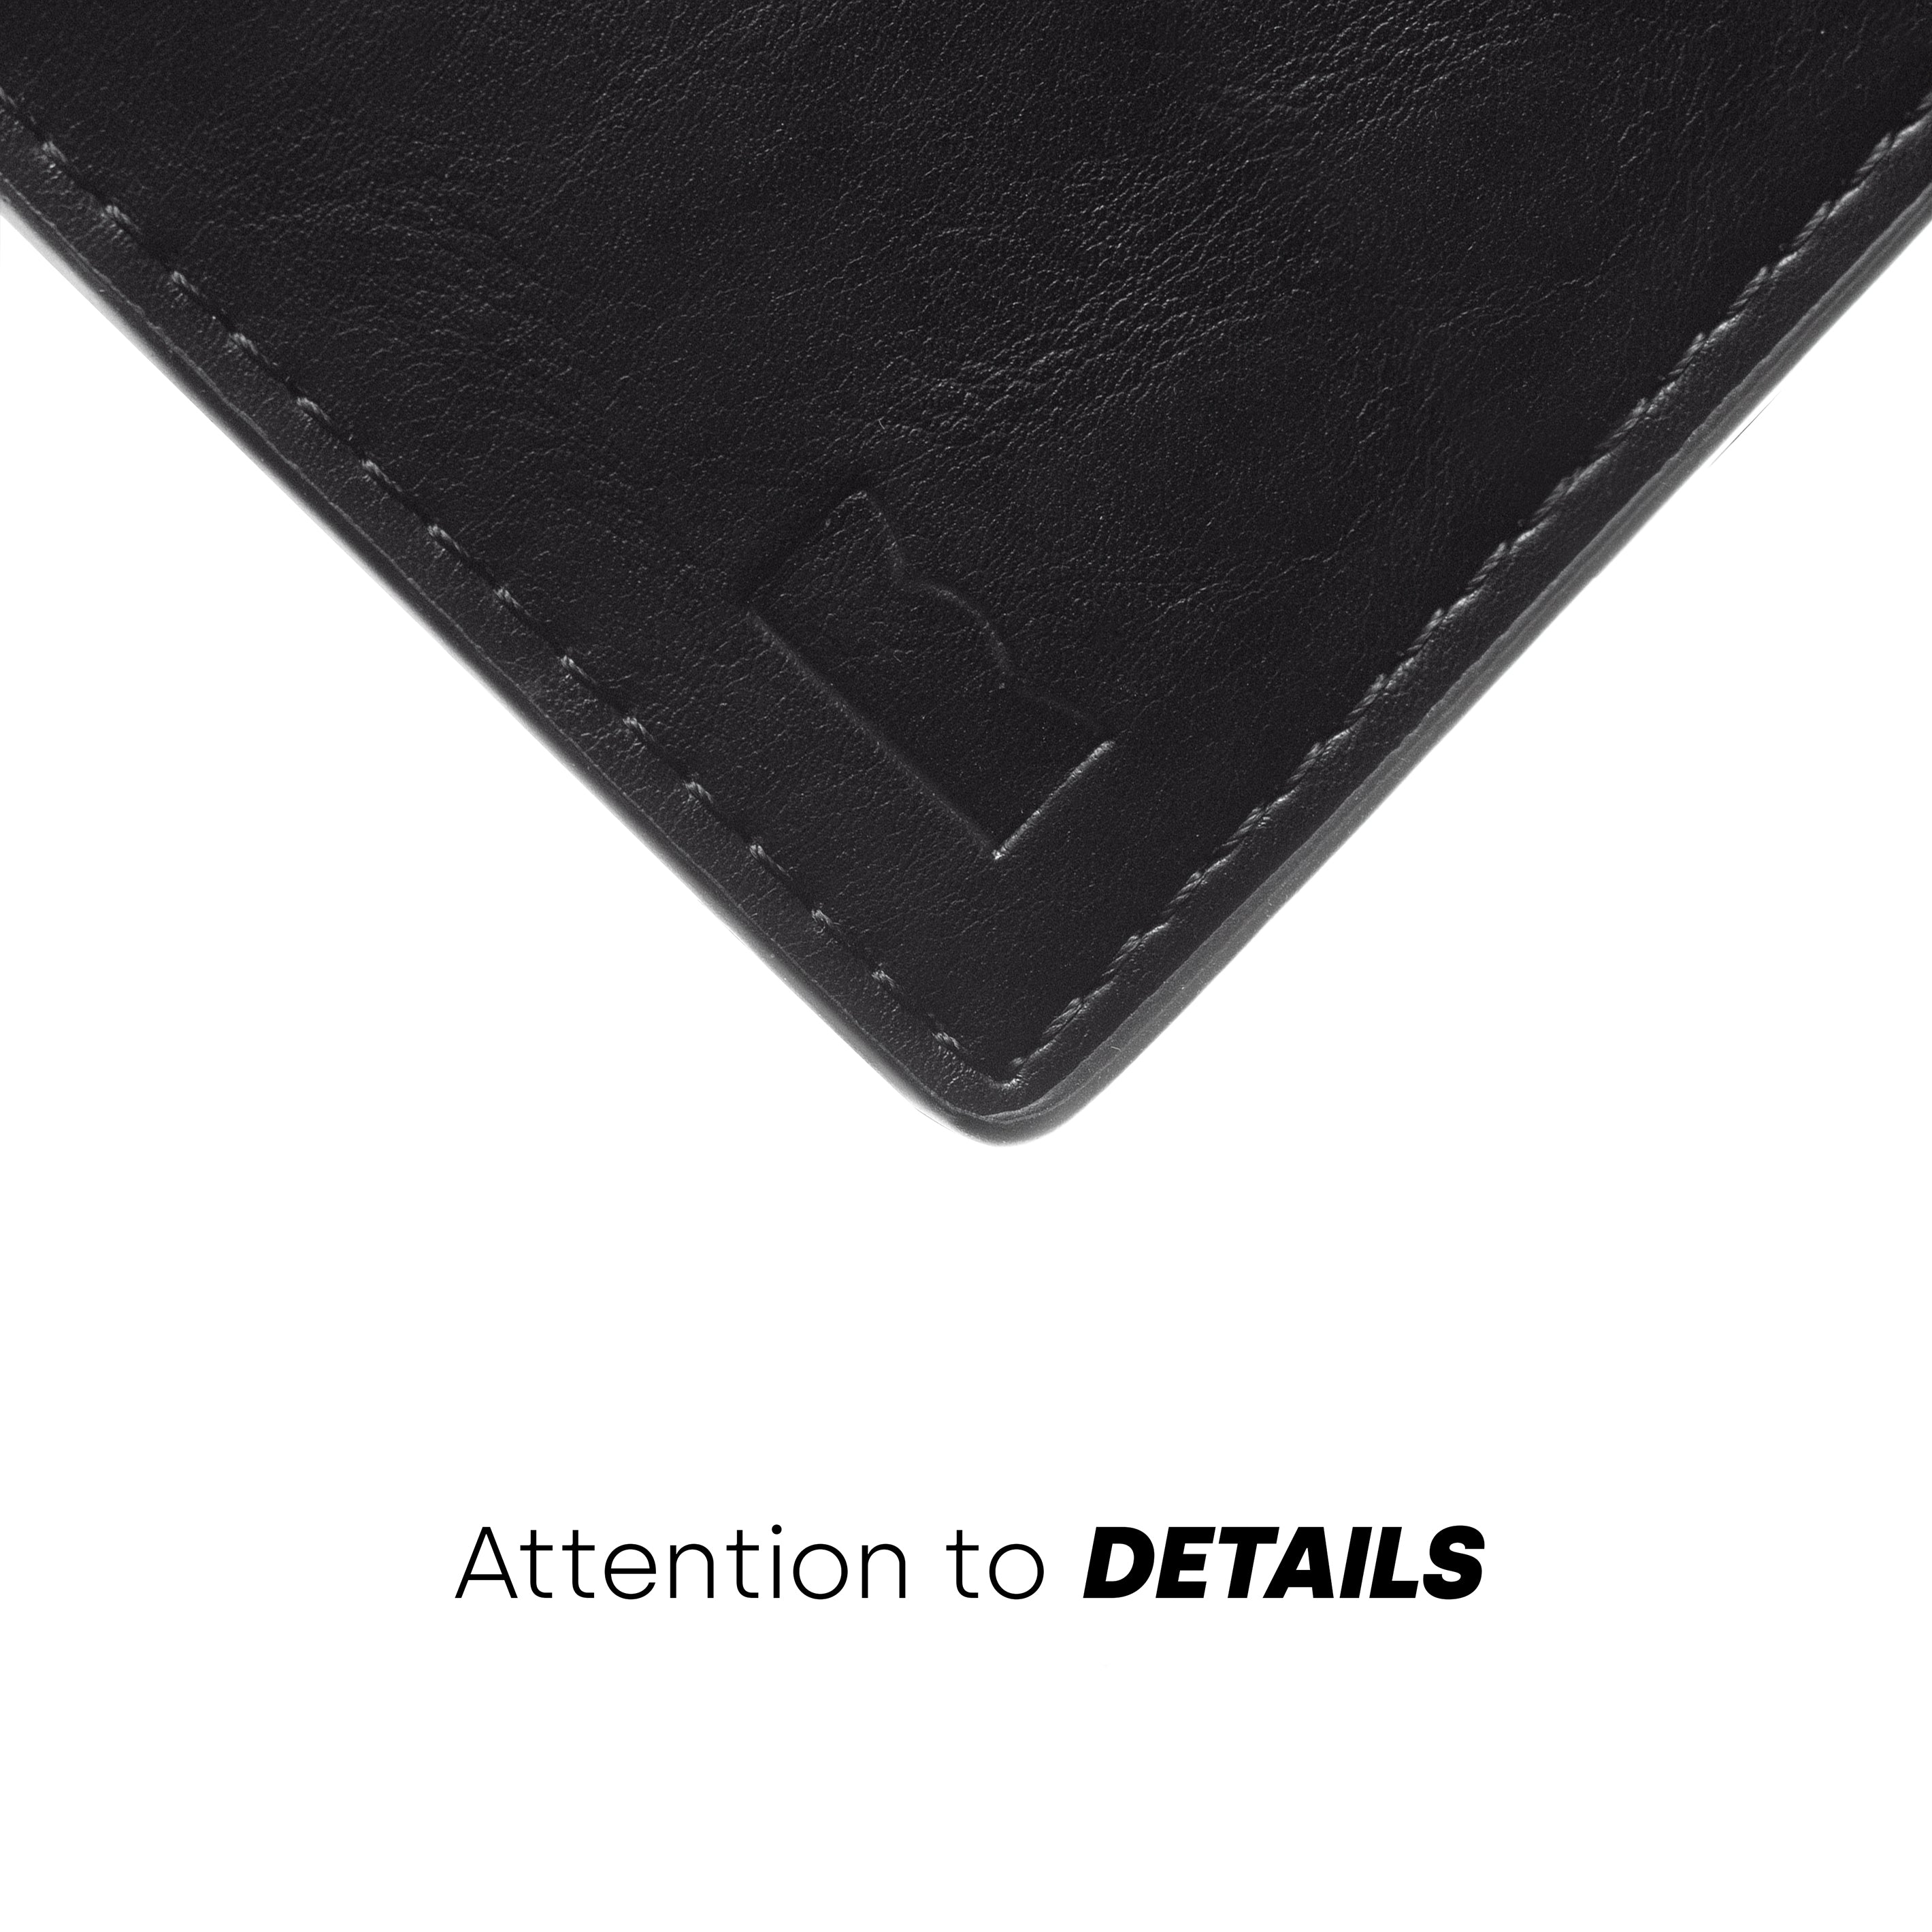 Obsidian Black Compact Wallet